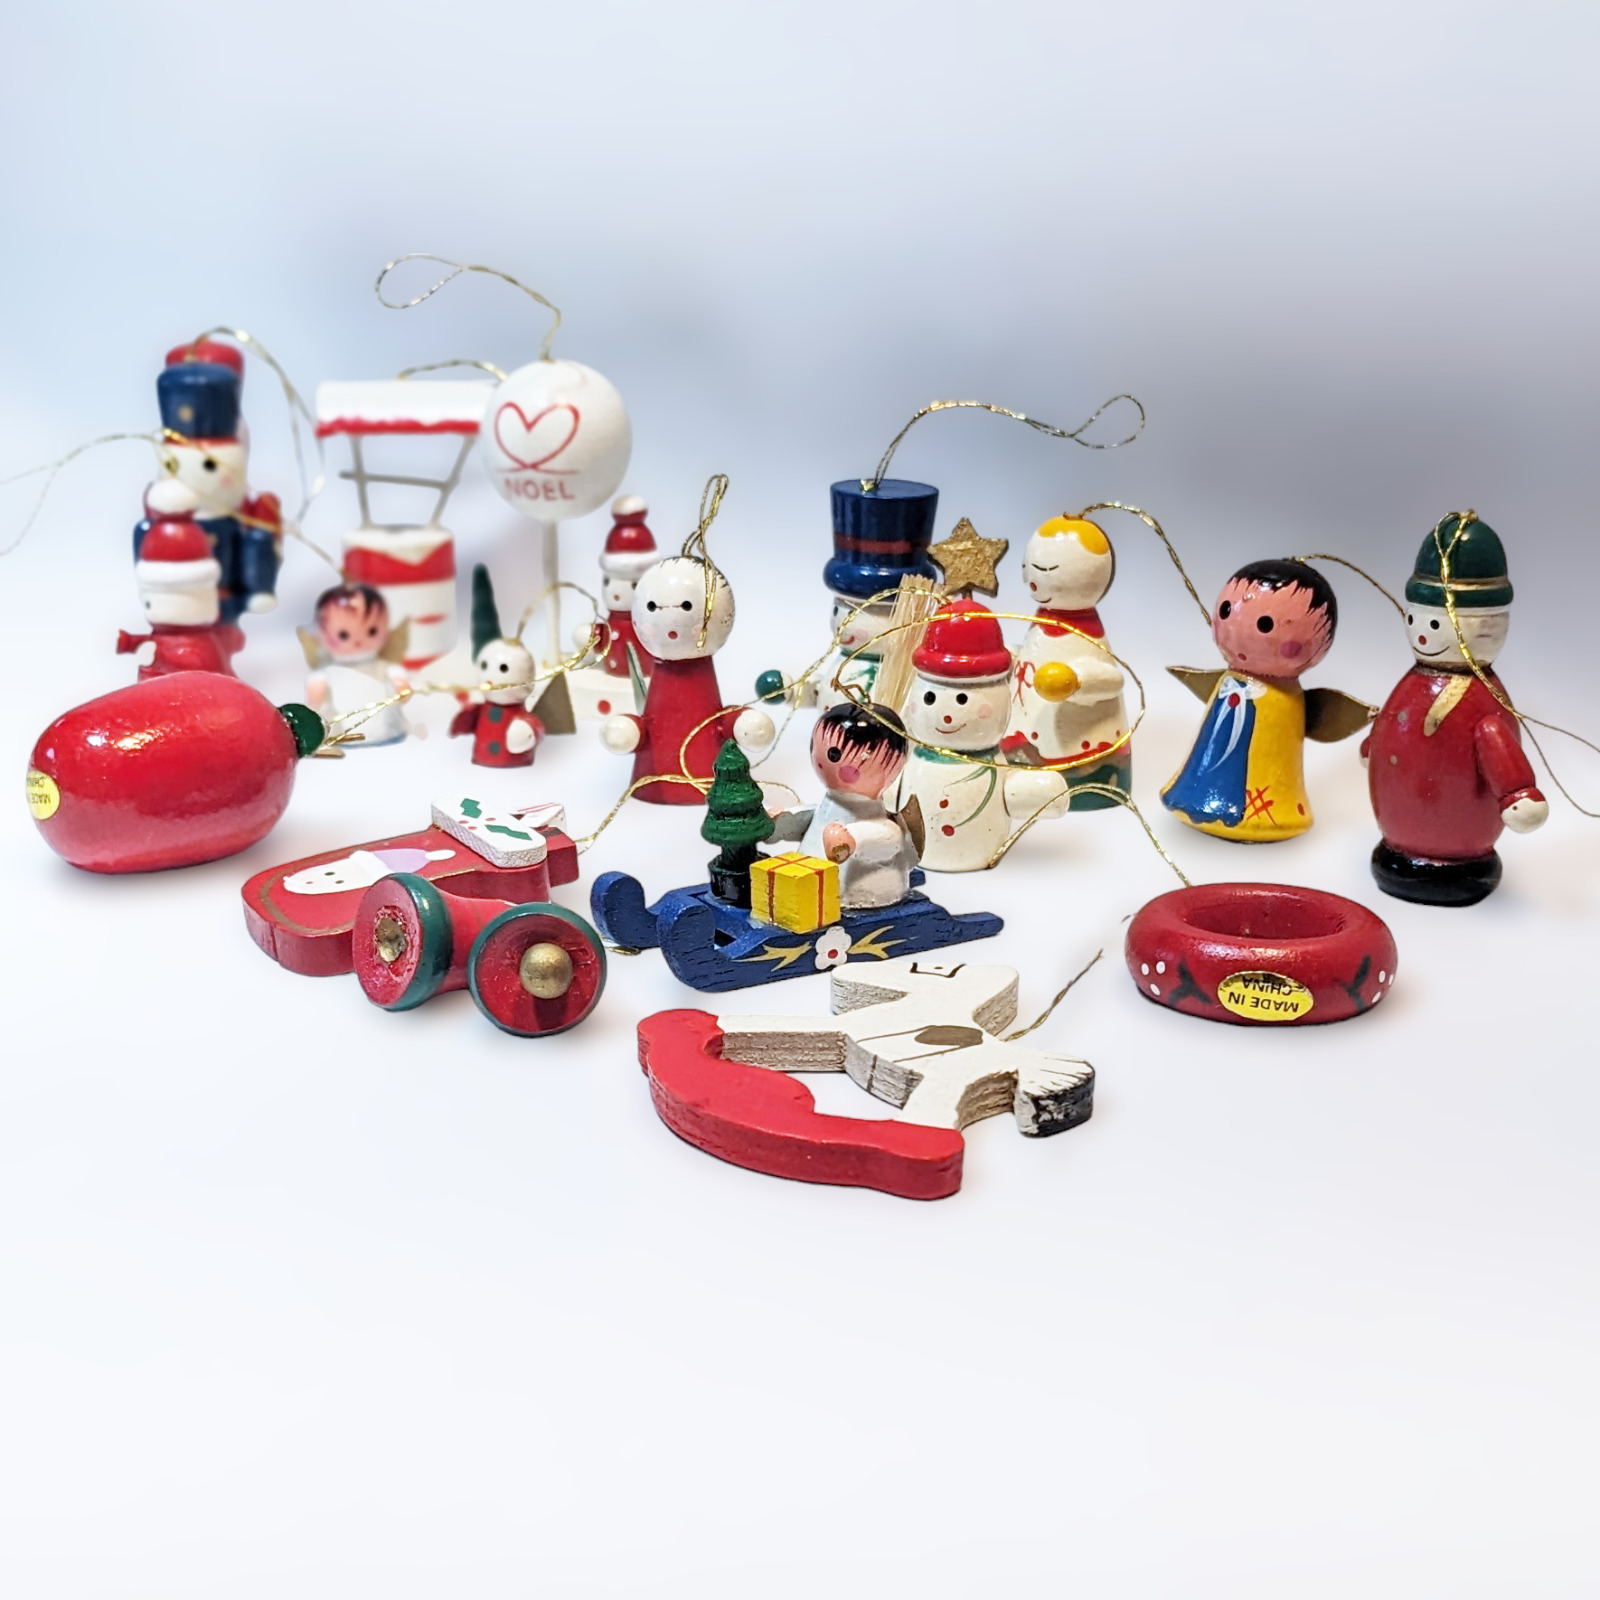 19x Vintage Christmas Ornaments Lot assortment SMALL MINI figurines Holiday